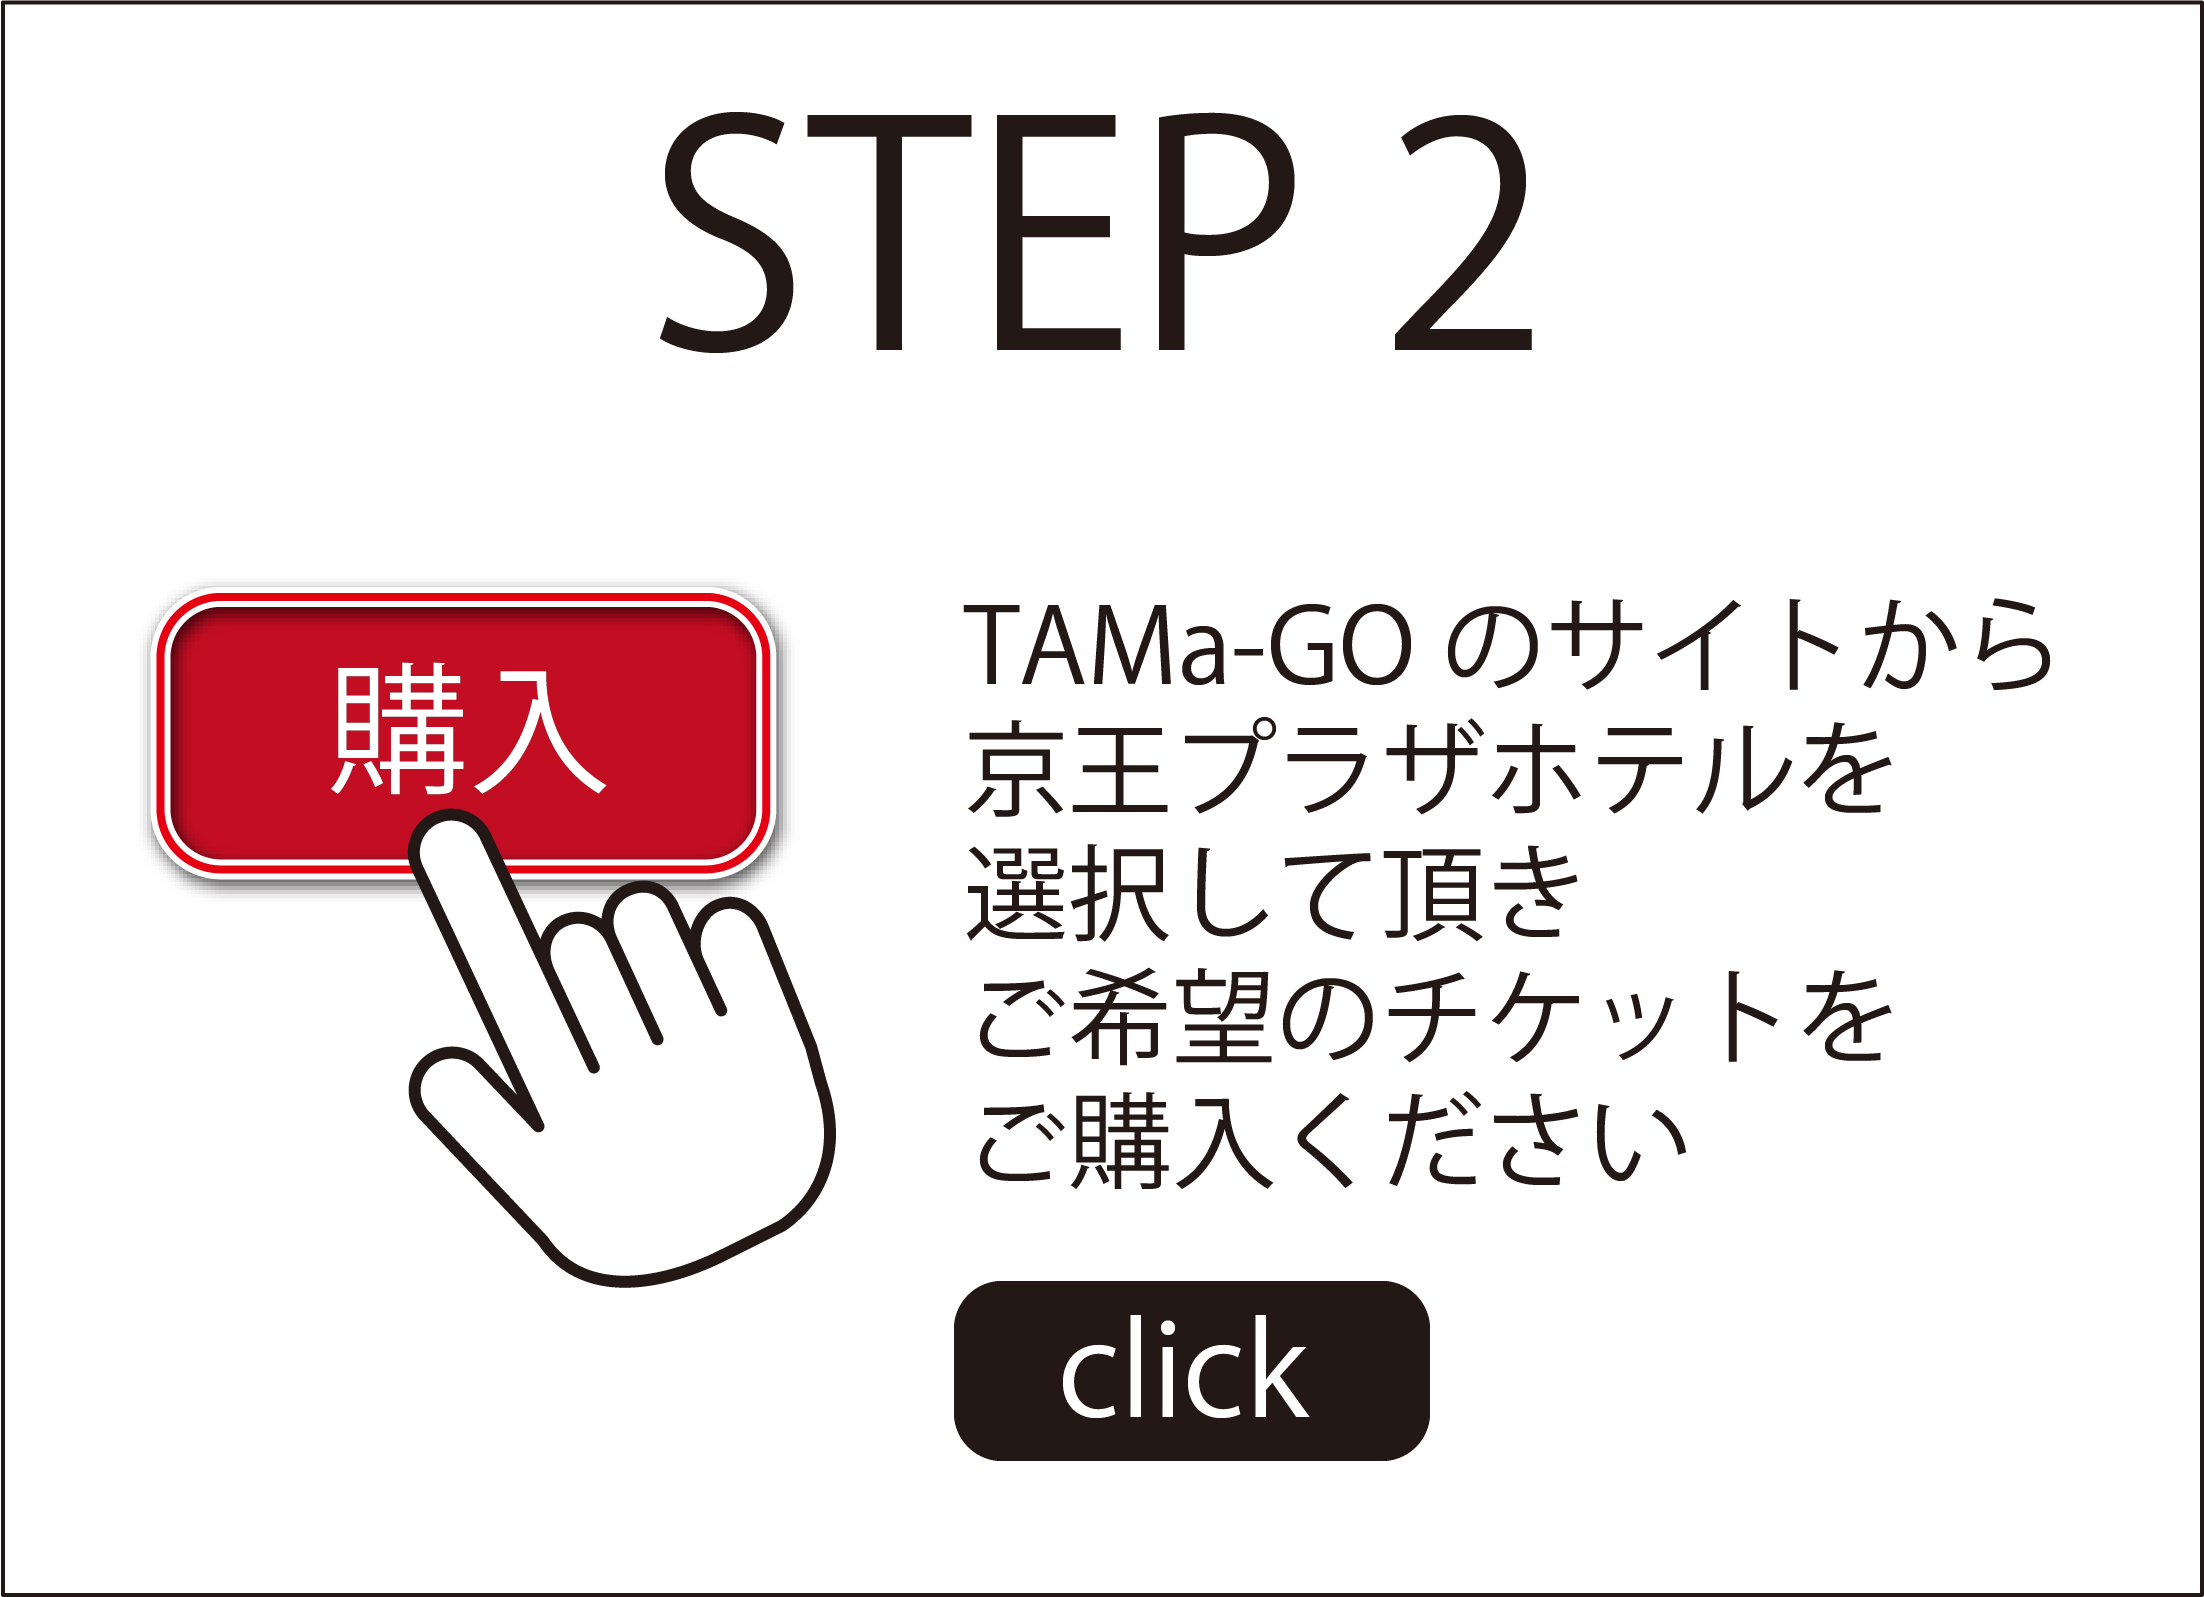 STEP 2 TAMa-GOのサイトから、京王プラザホテルを選択して頂き、ご希望のチケットをご購入ください